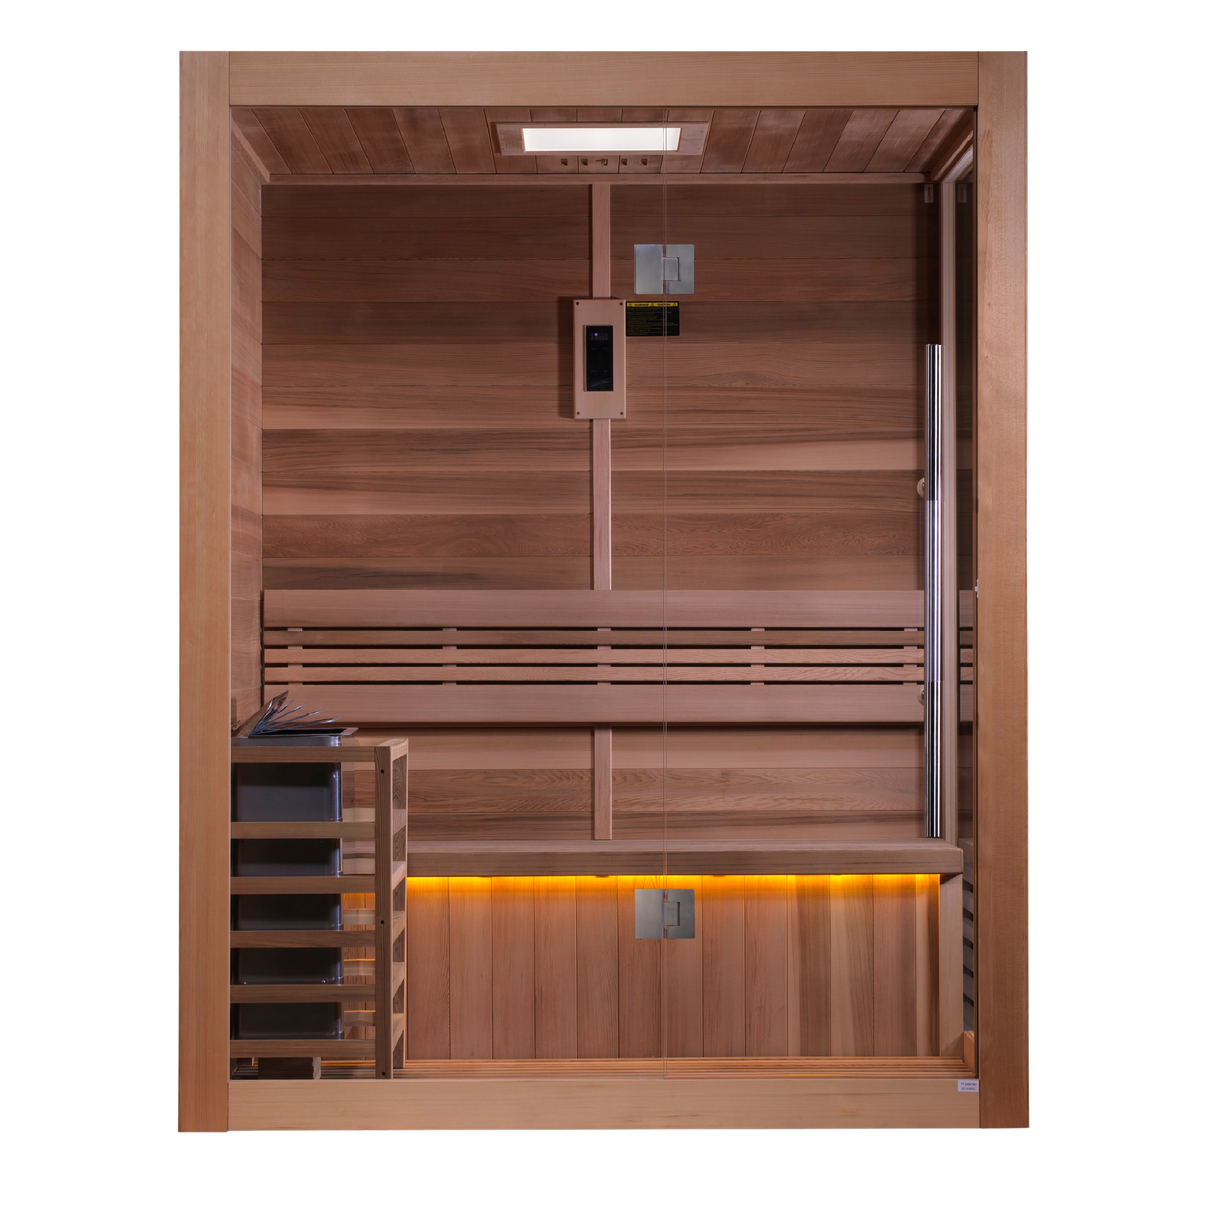 Golden Designs Hanko 3-Person Indoor Traditional Sauna GDI-7202-01